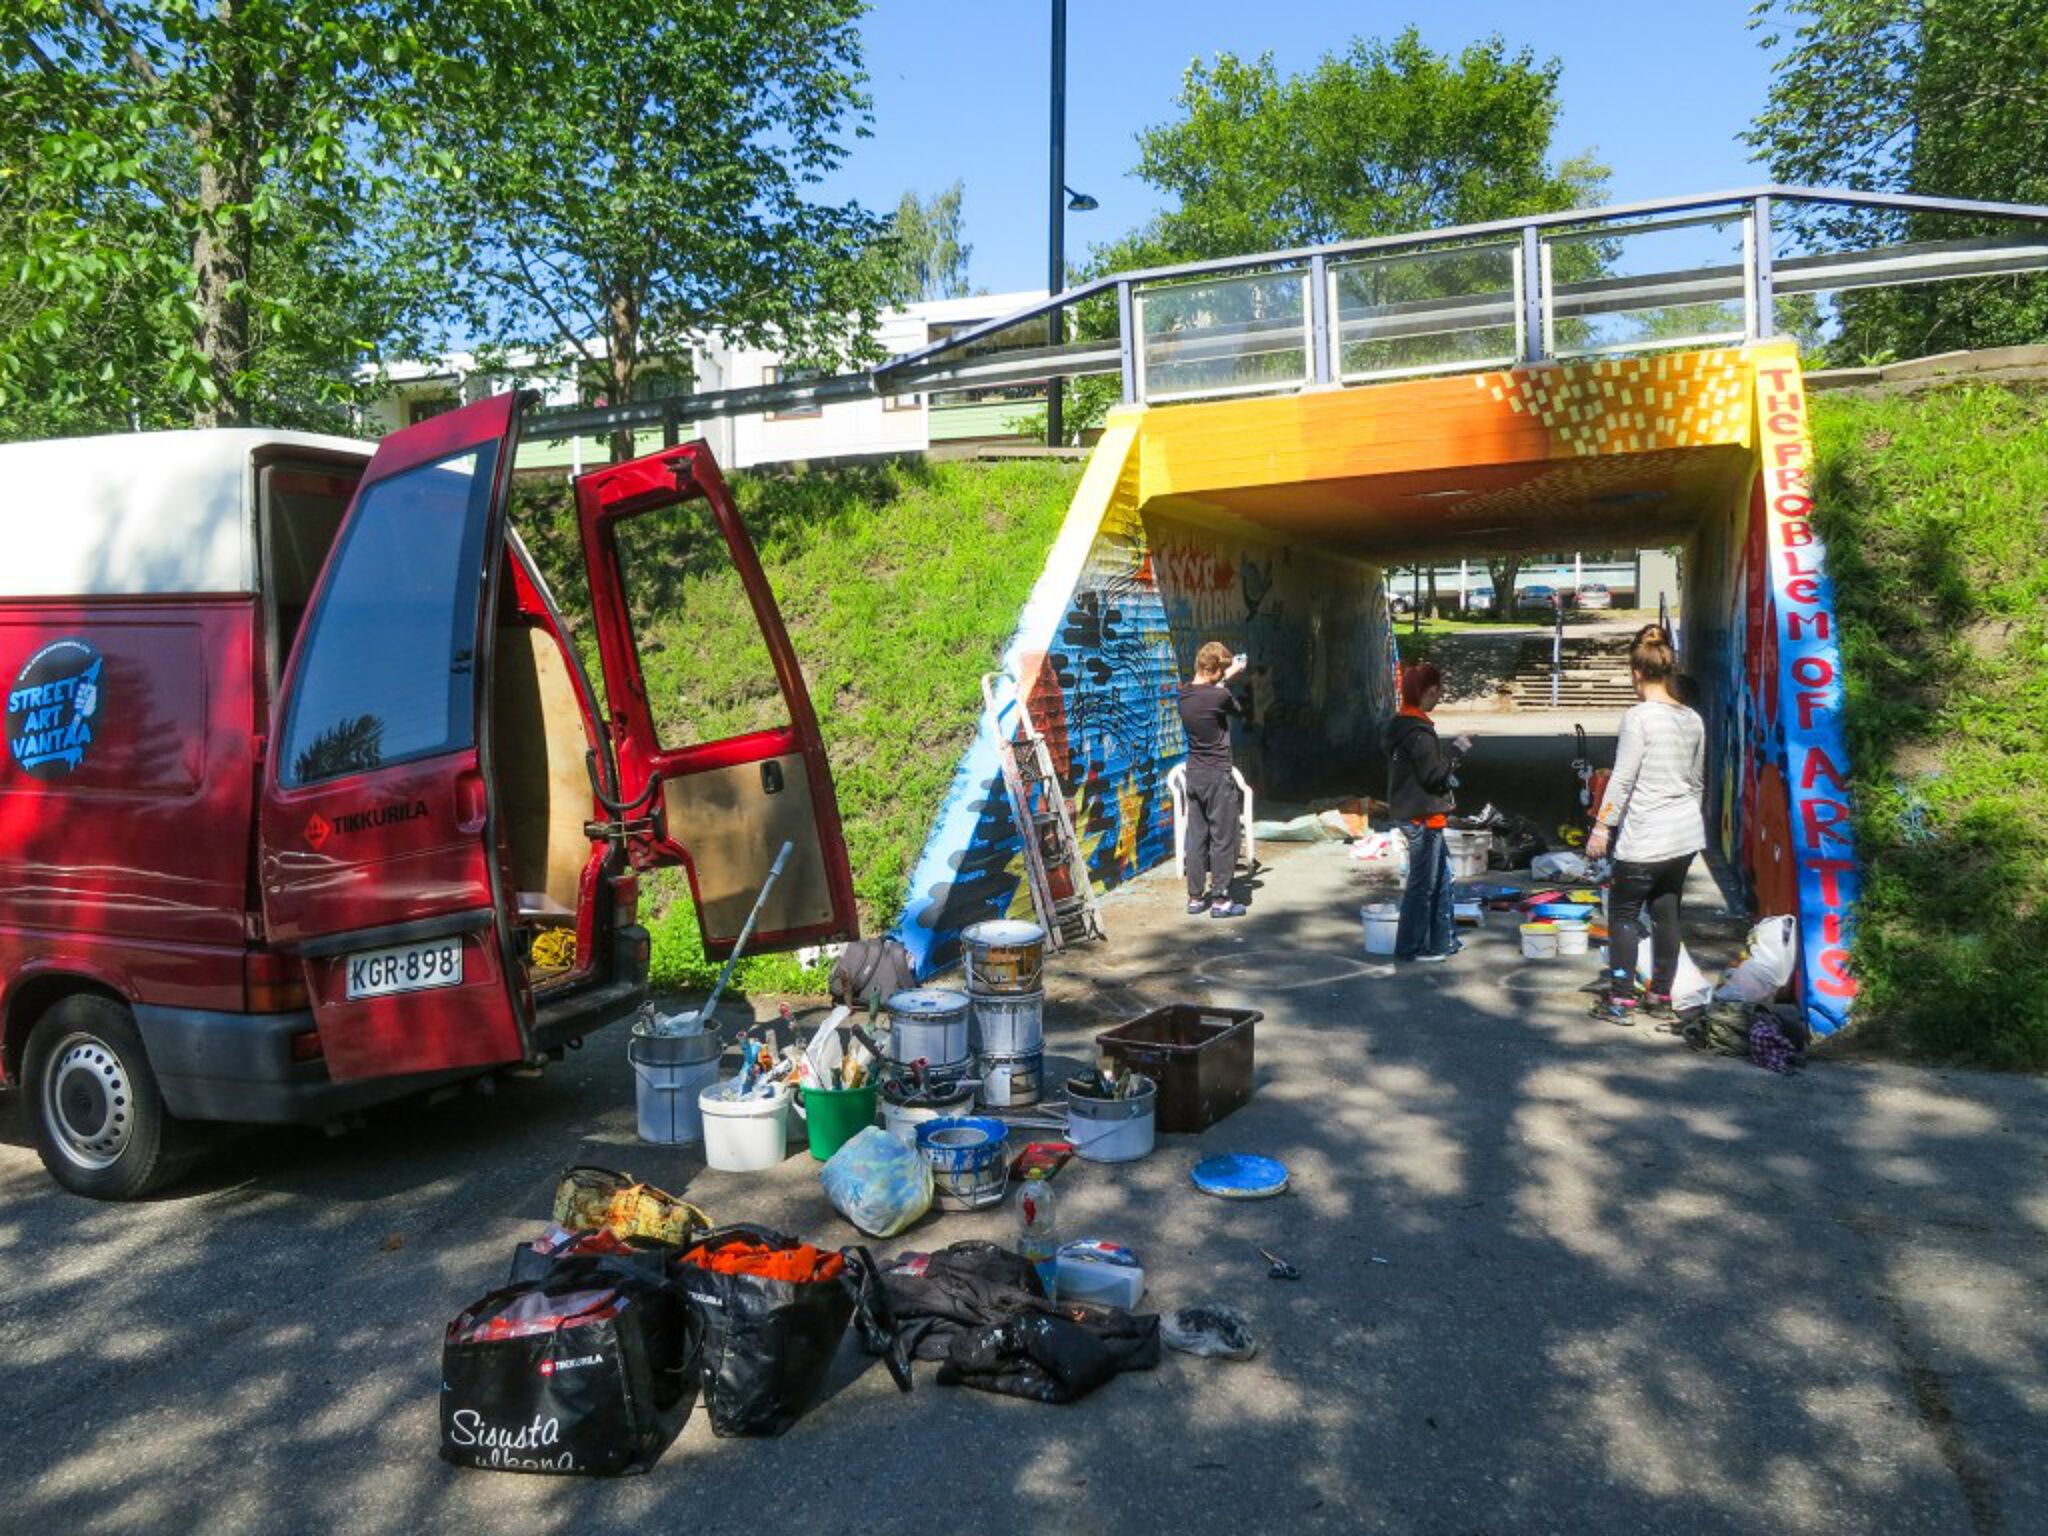 Street Art Vantaa&mdash;Workshop tunnel with local school